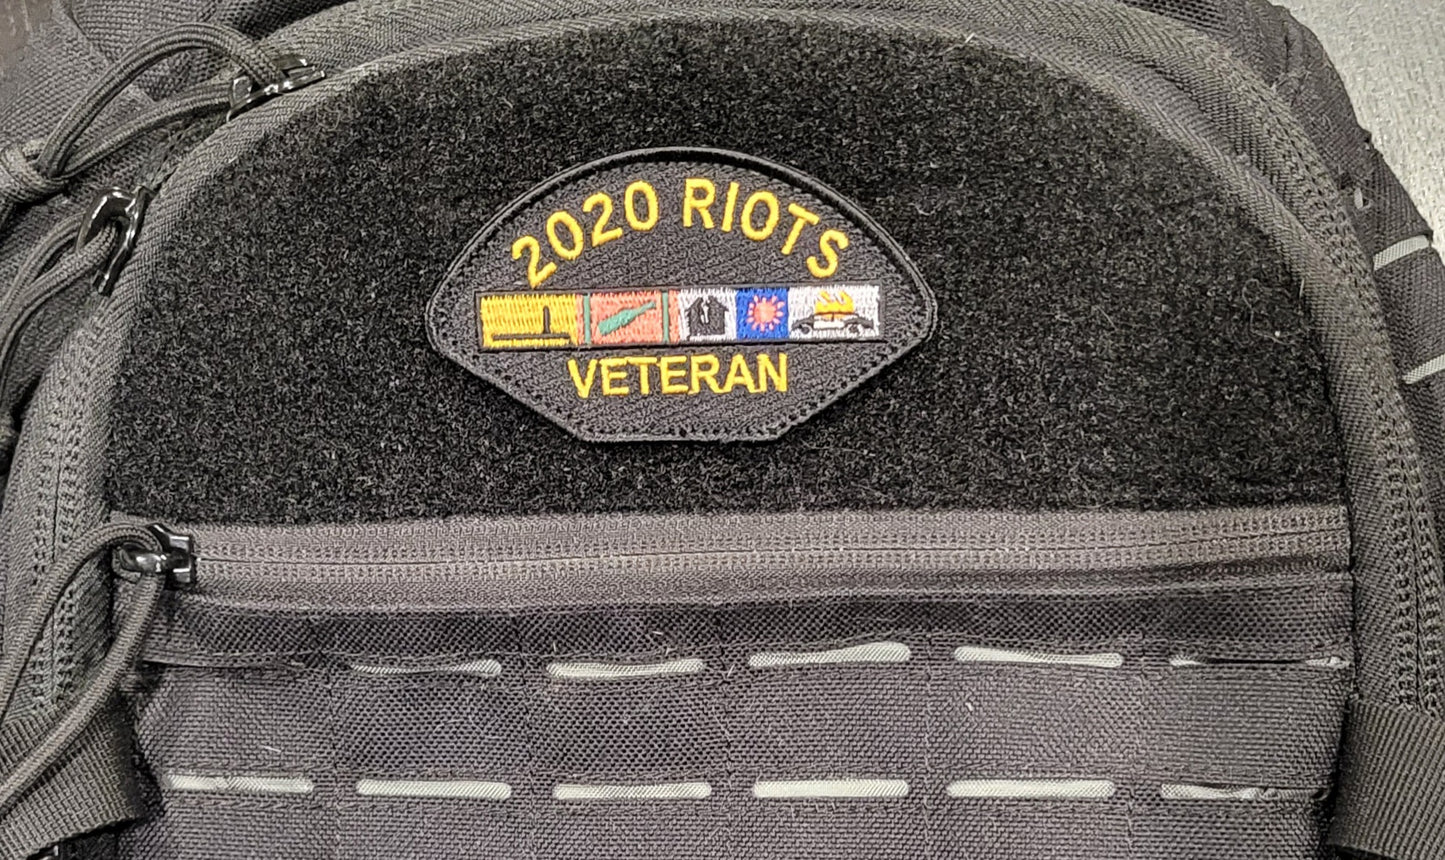 2020 Riots Veteran Patch